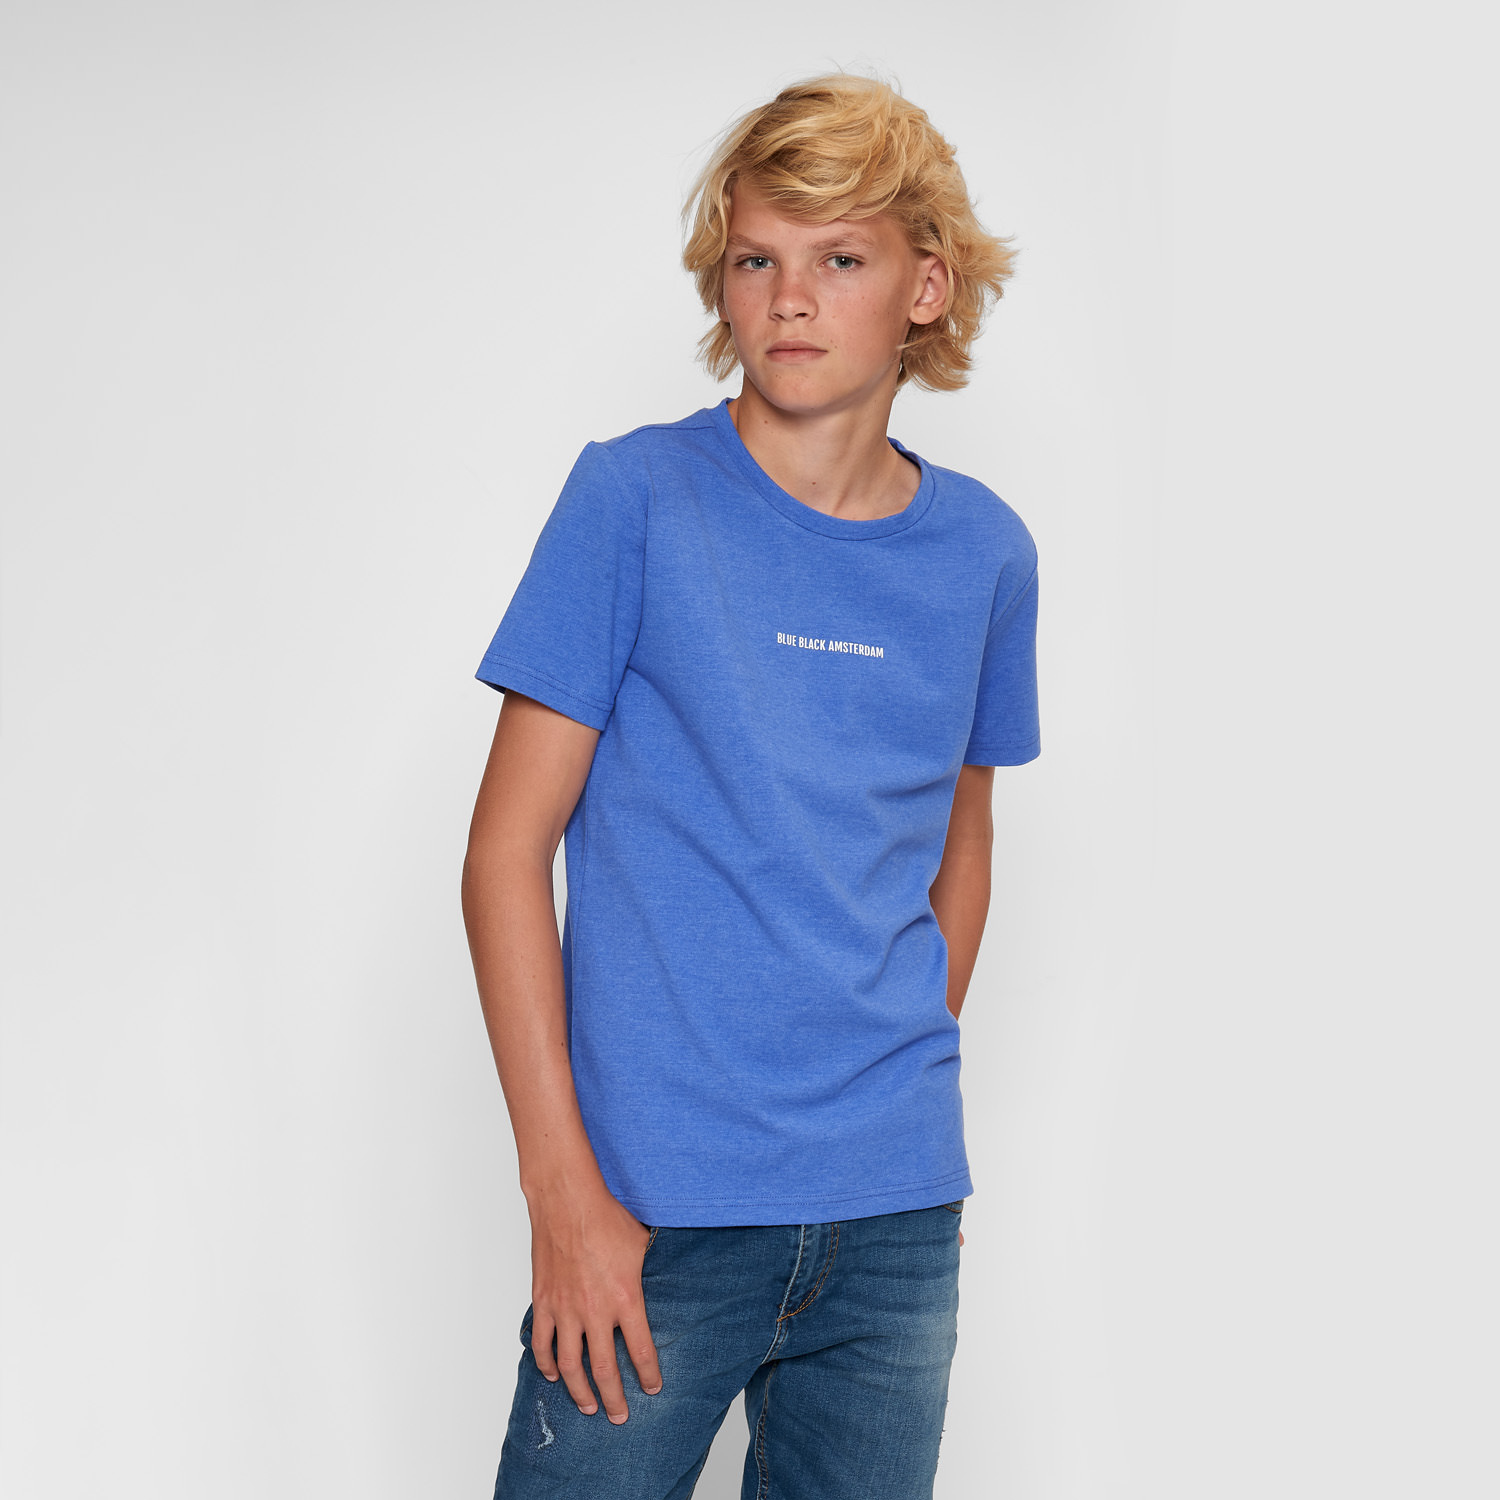 BlueBlack T-shirt TIES Kobalt Melange front